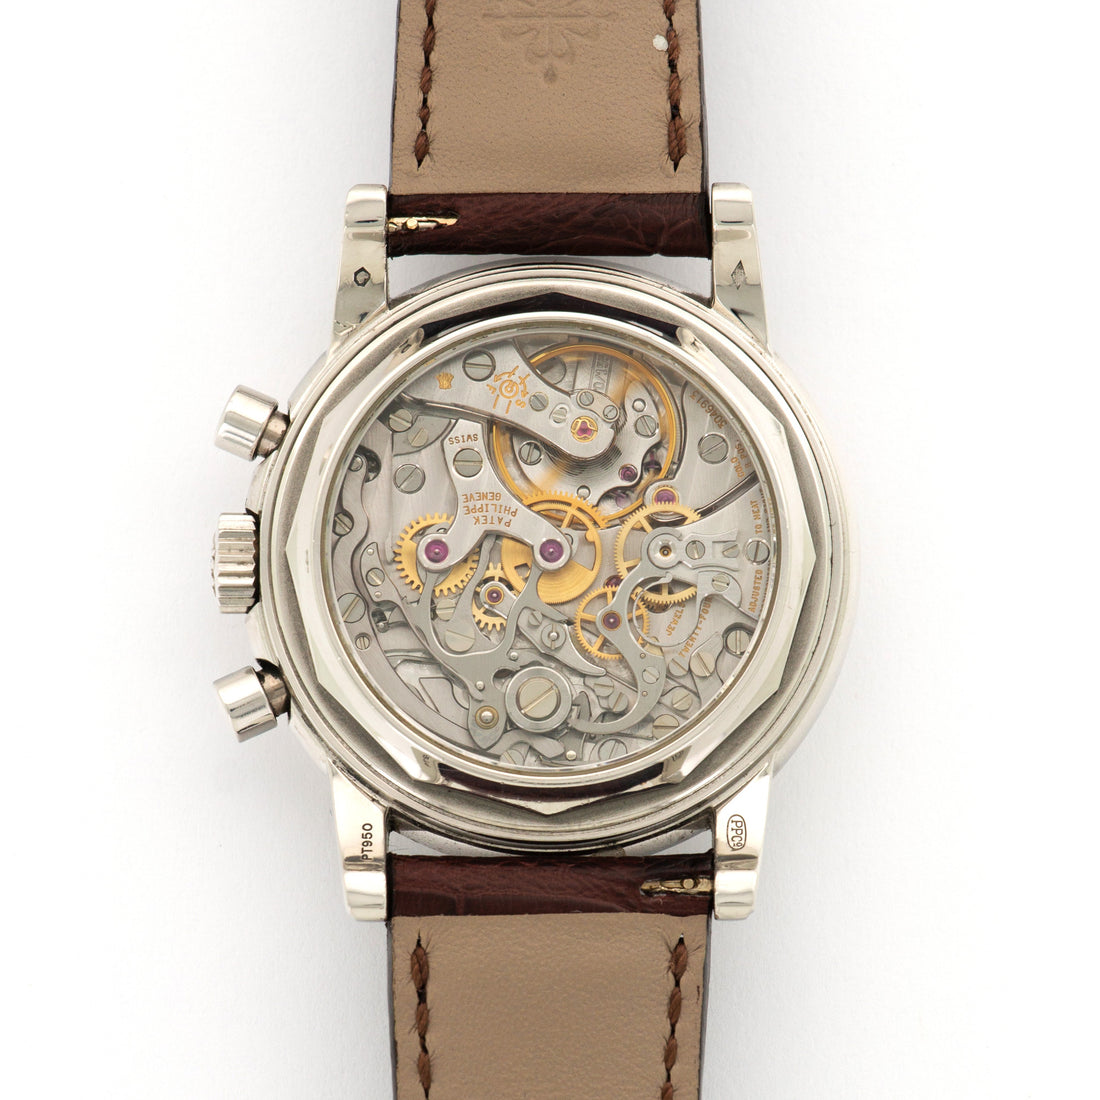 Patek Philippe Platinum Perpetual Calendar Chrono Watch Ref. 3970